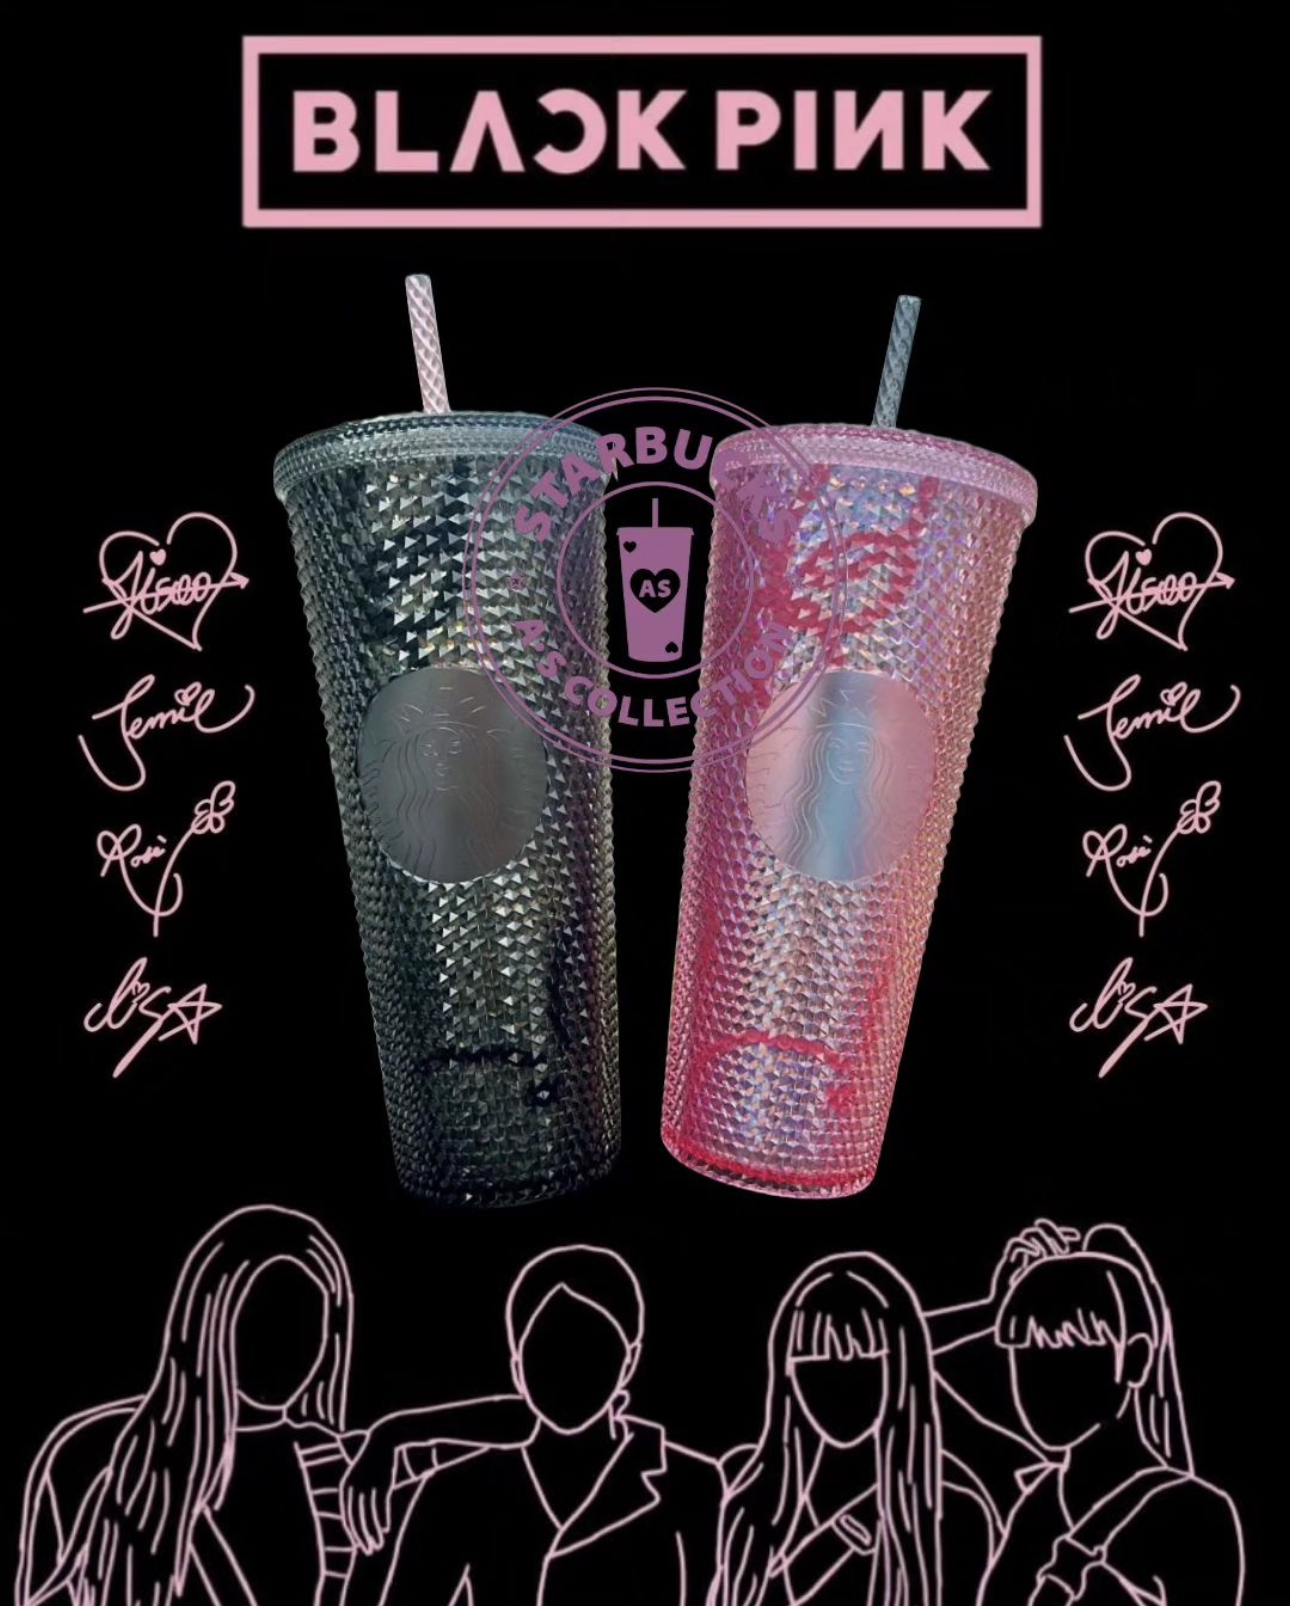 BLACKPINK × Starbucks Collection   Sportskeeda Stories